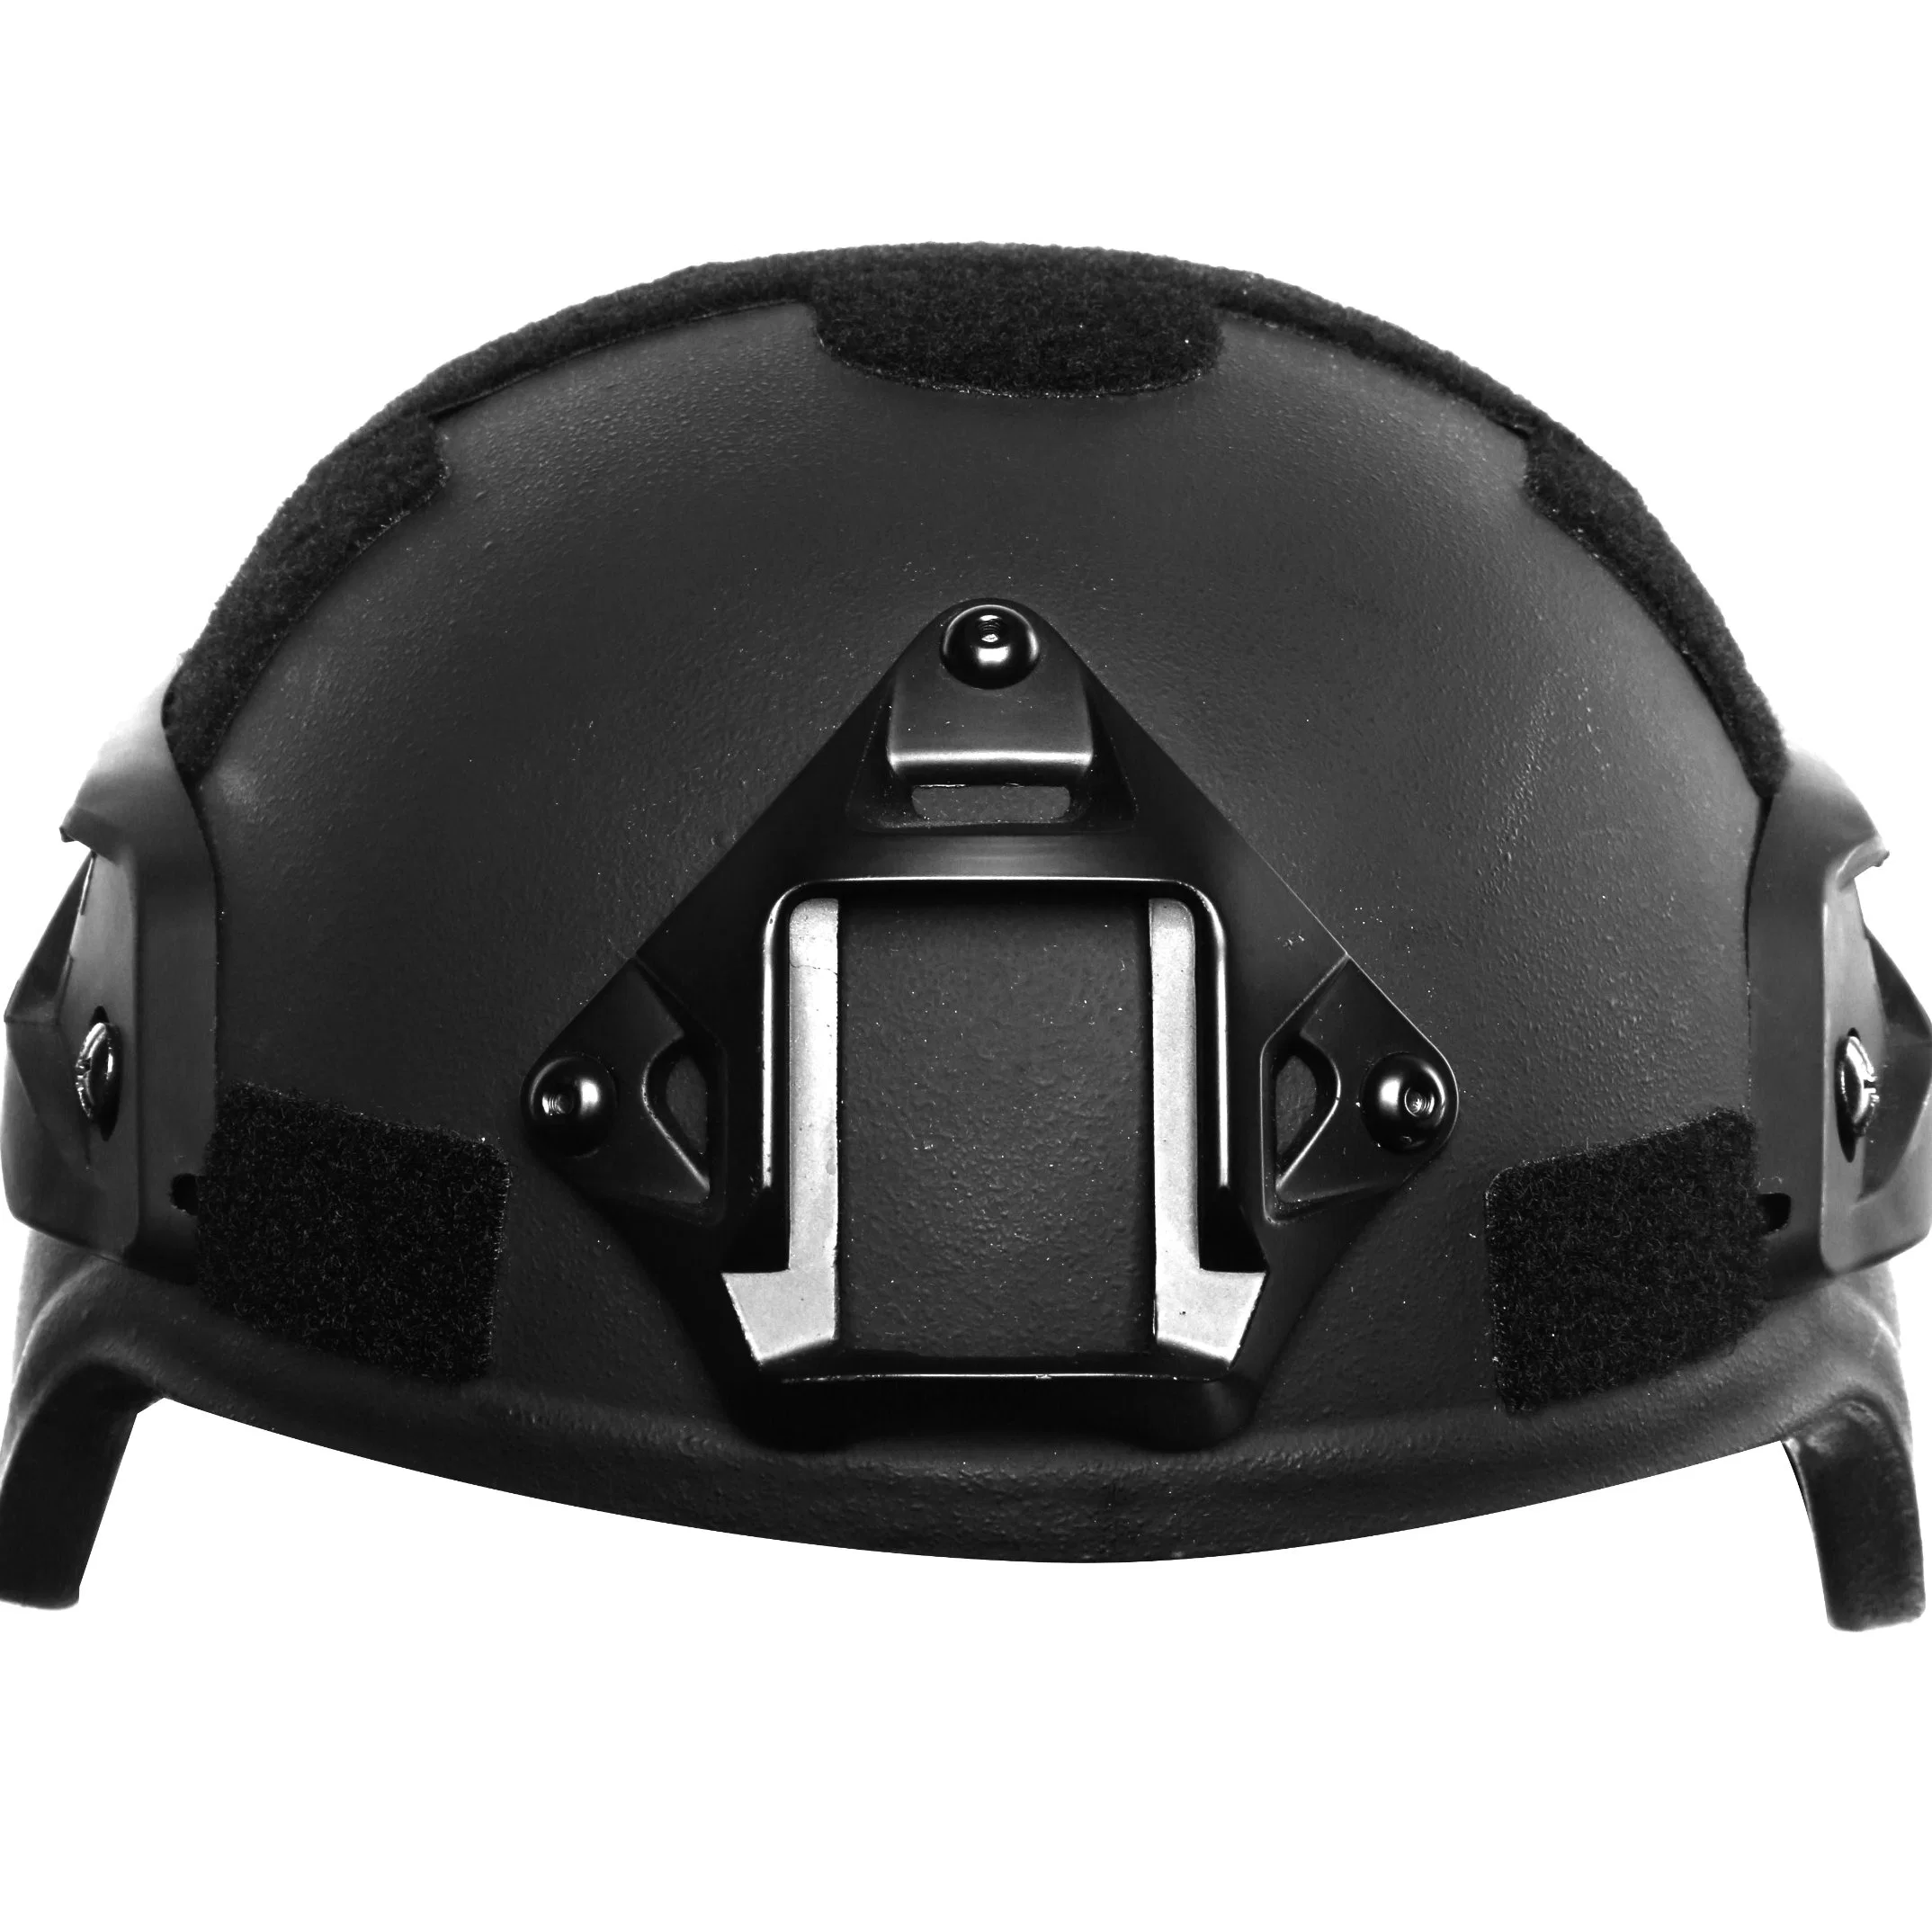 Protective Helmet UHMWPE / Aramid Tactical Safety Helmet for Battleground